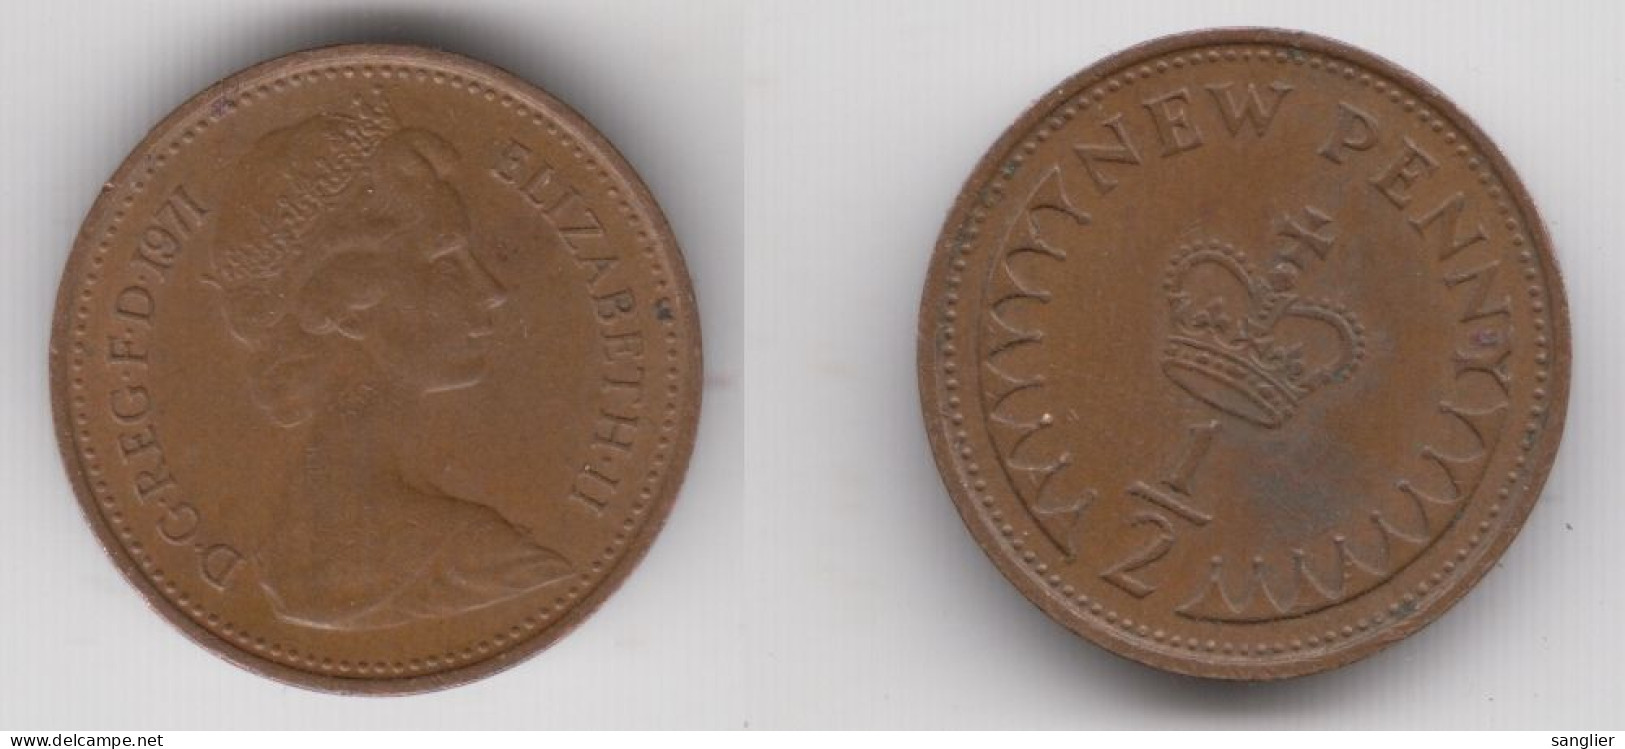 1/2 NEW PENNY 1971 - 1/2 Penny & 1/2 New Penny